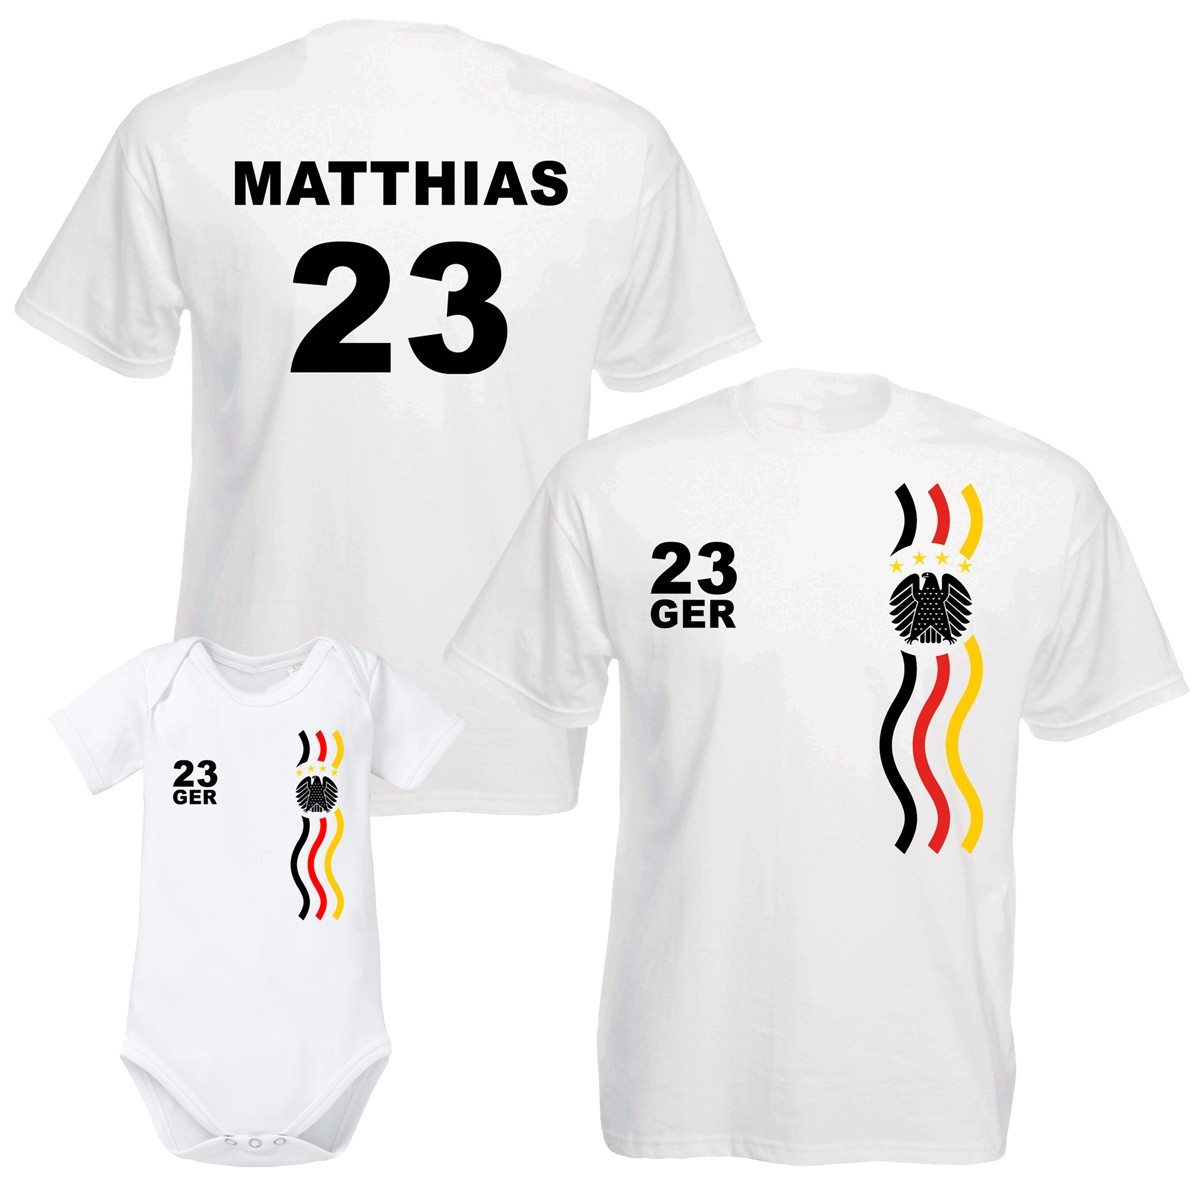 WM-Shirt weiß - als Tanktop, Babybody, Kinder, Damen oder Herrenshirt - Adler + Wunschzahl